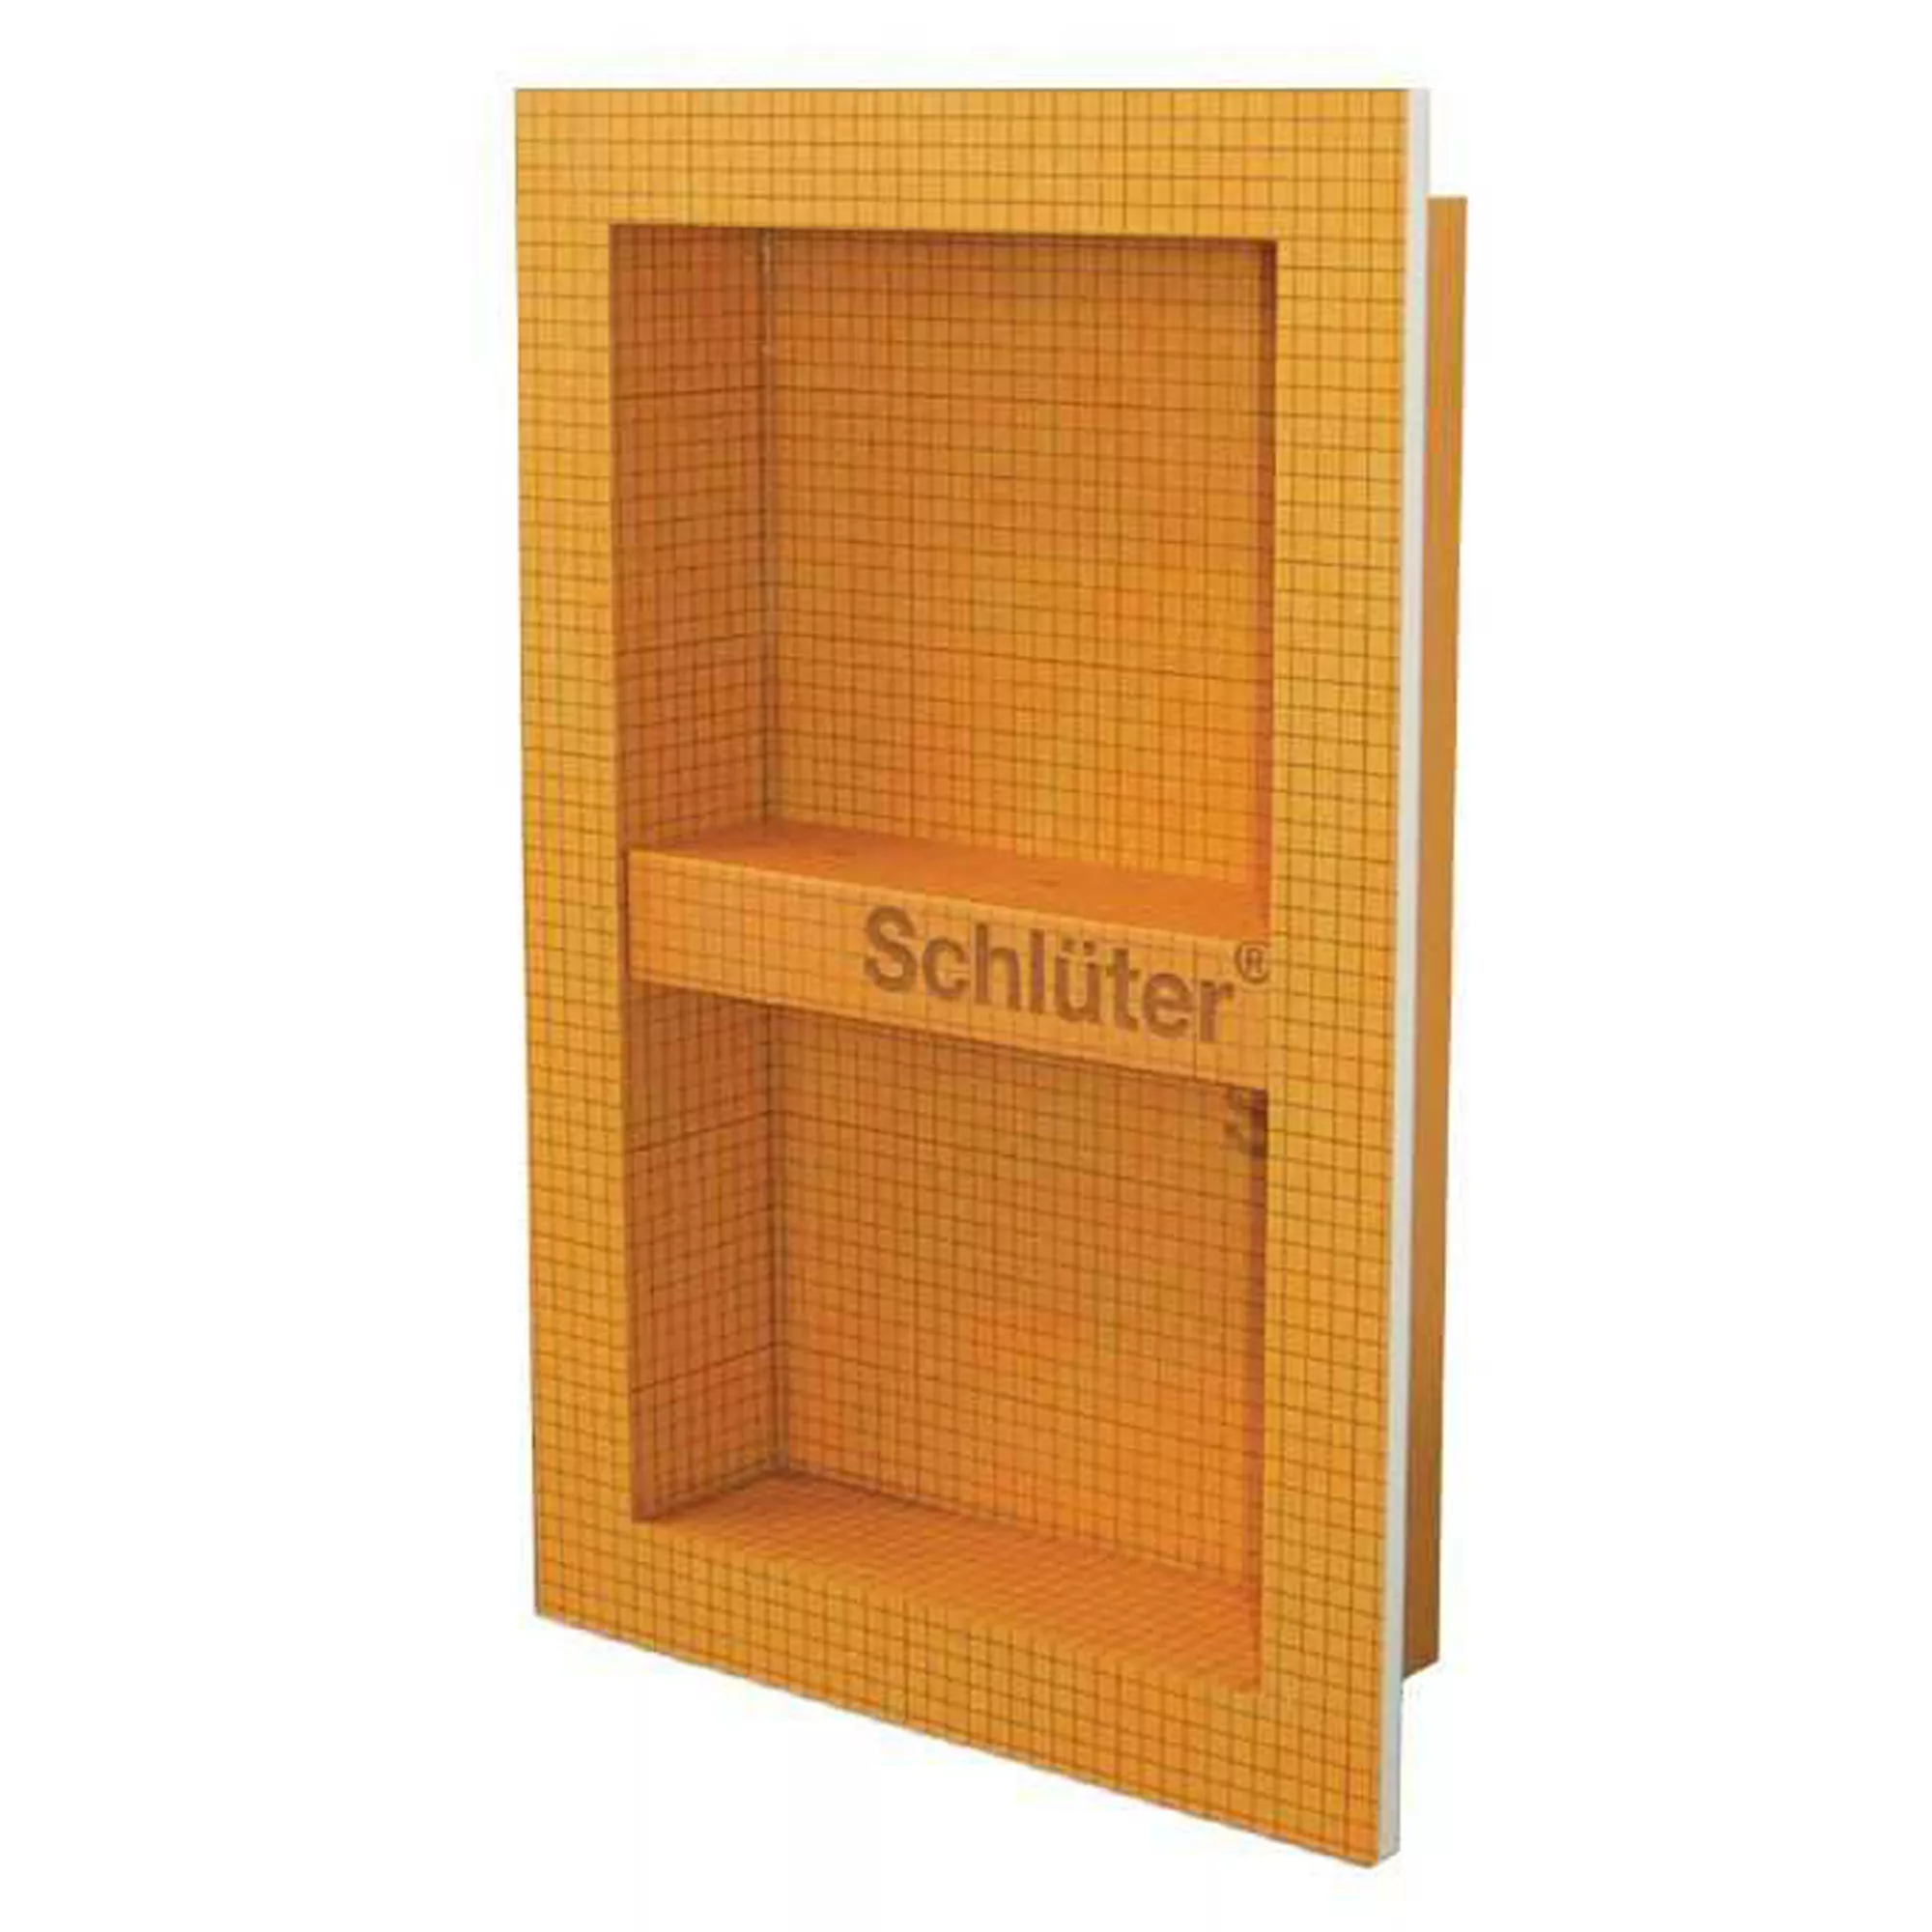 Schlüter Kerdi Board N - Αποθηκευτικός χώρος Niche (305x508x89mm)